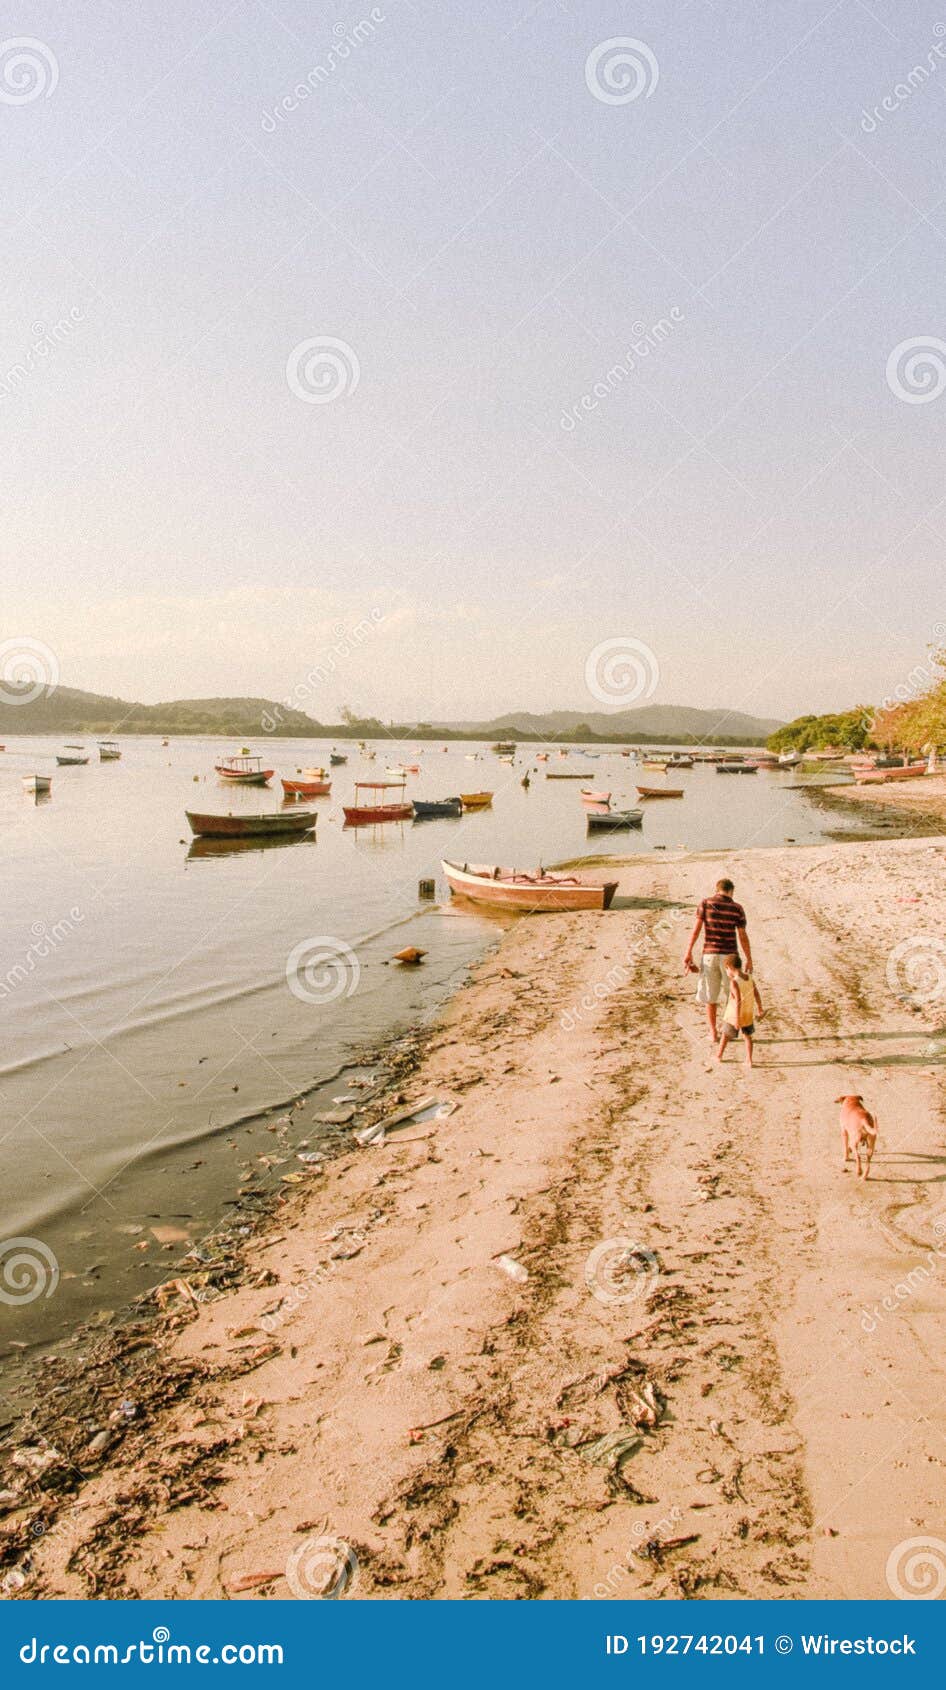 https://thumbs.dreamstime.com/z/vertical-shot-people-walking-along-beautiful-sandy-shore-fishing-boats-background-192742041.jpg